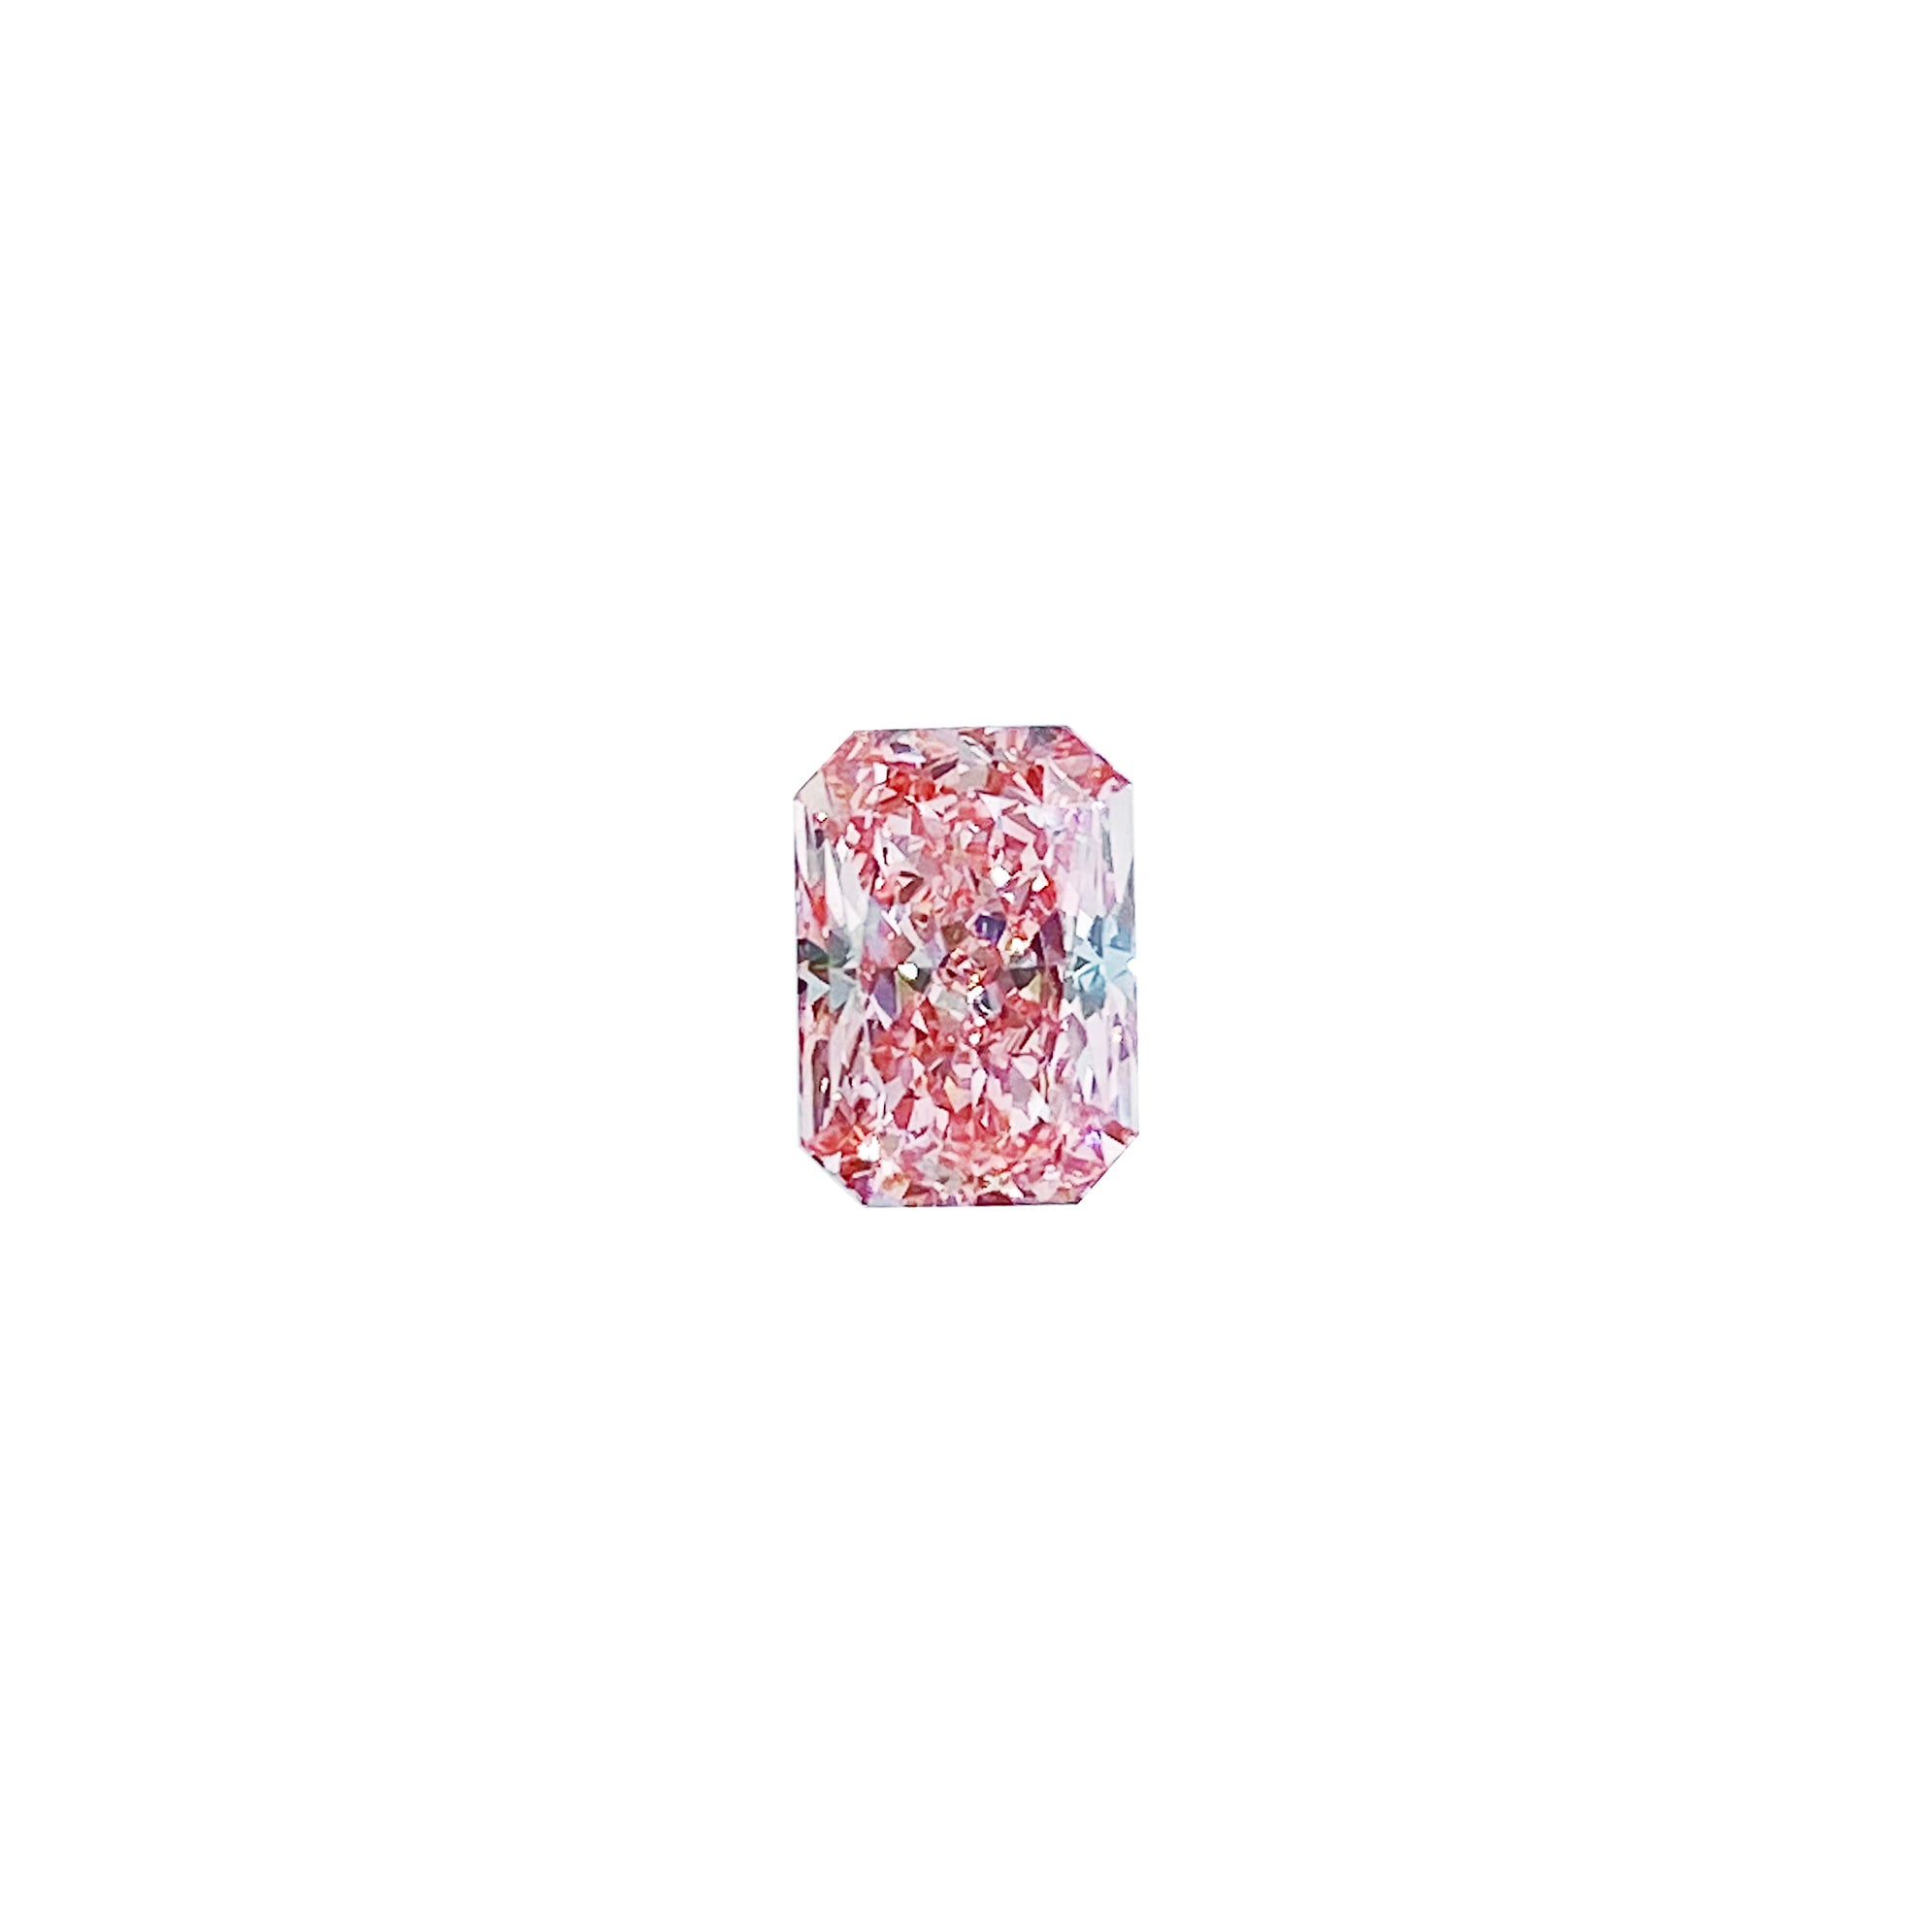 0.98 Radiant Fancy Vivid Pink Diamond